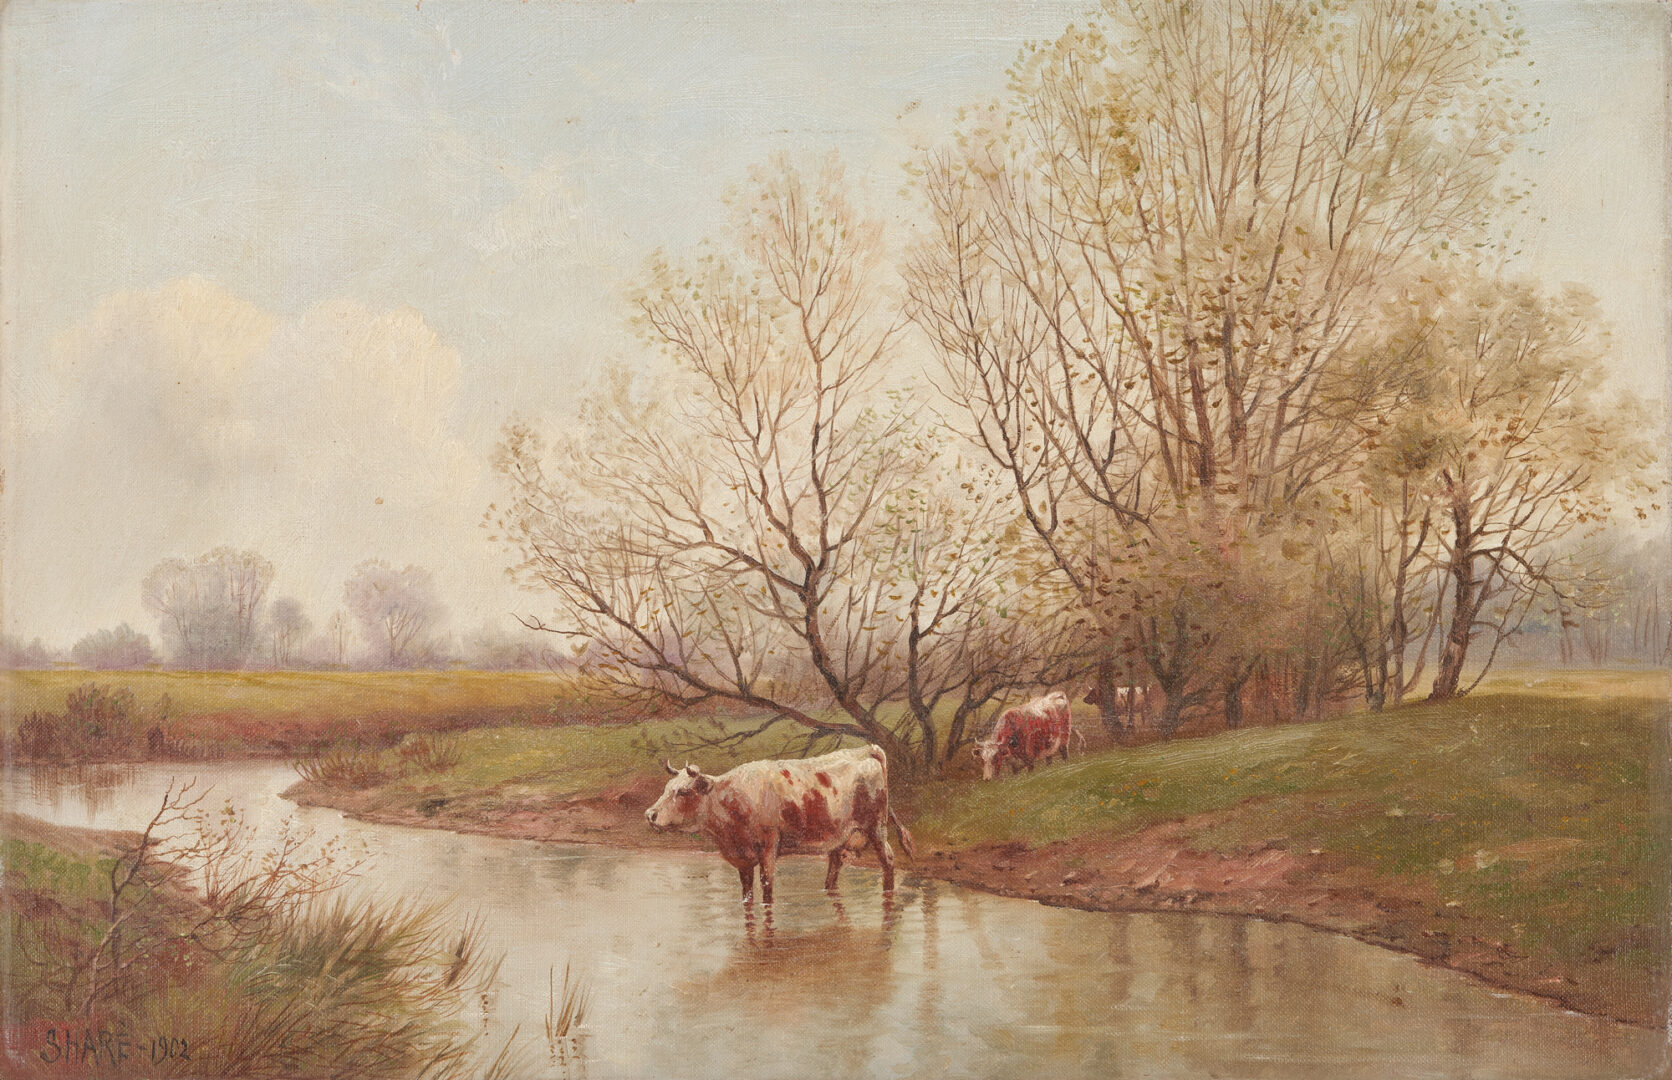 Lot 855: Henry Pruett Share CA O/C Painting of Cattle